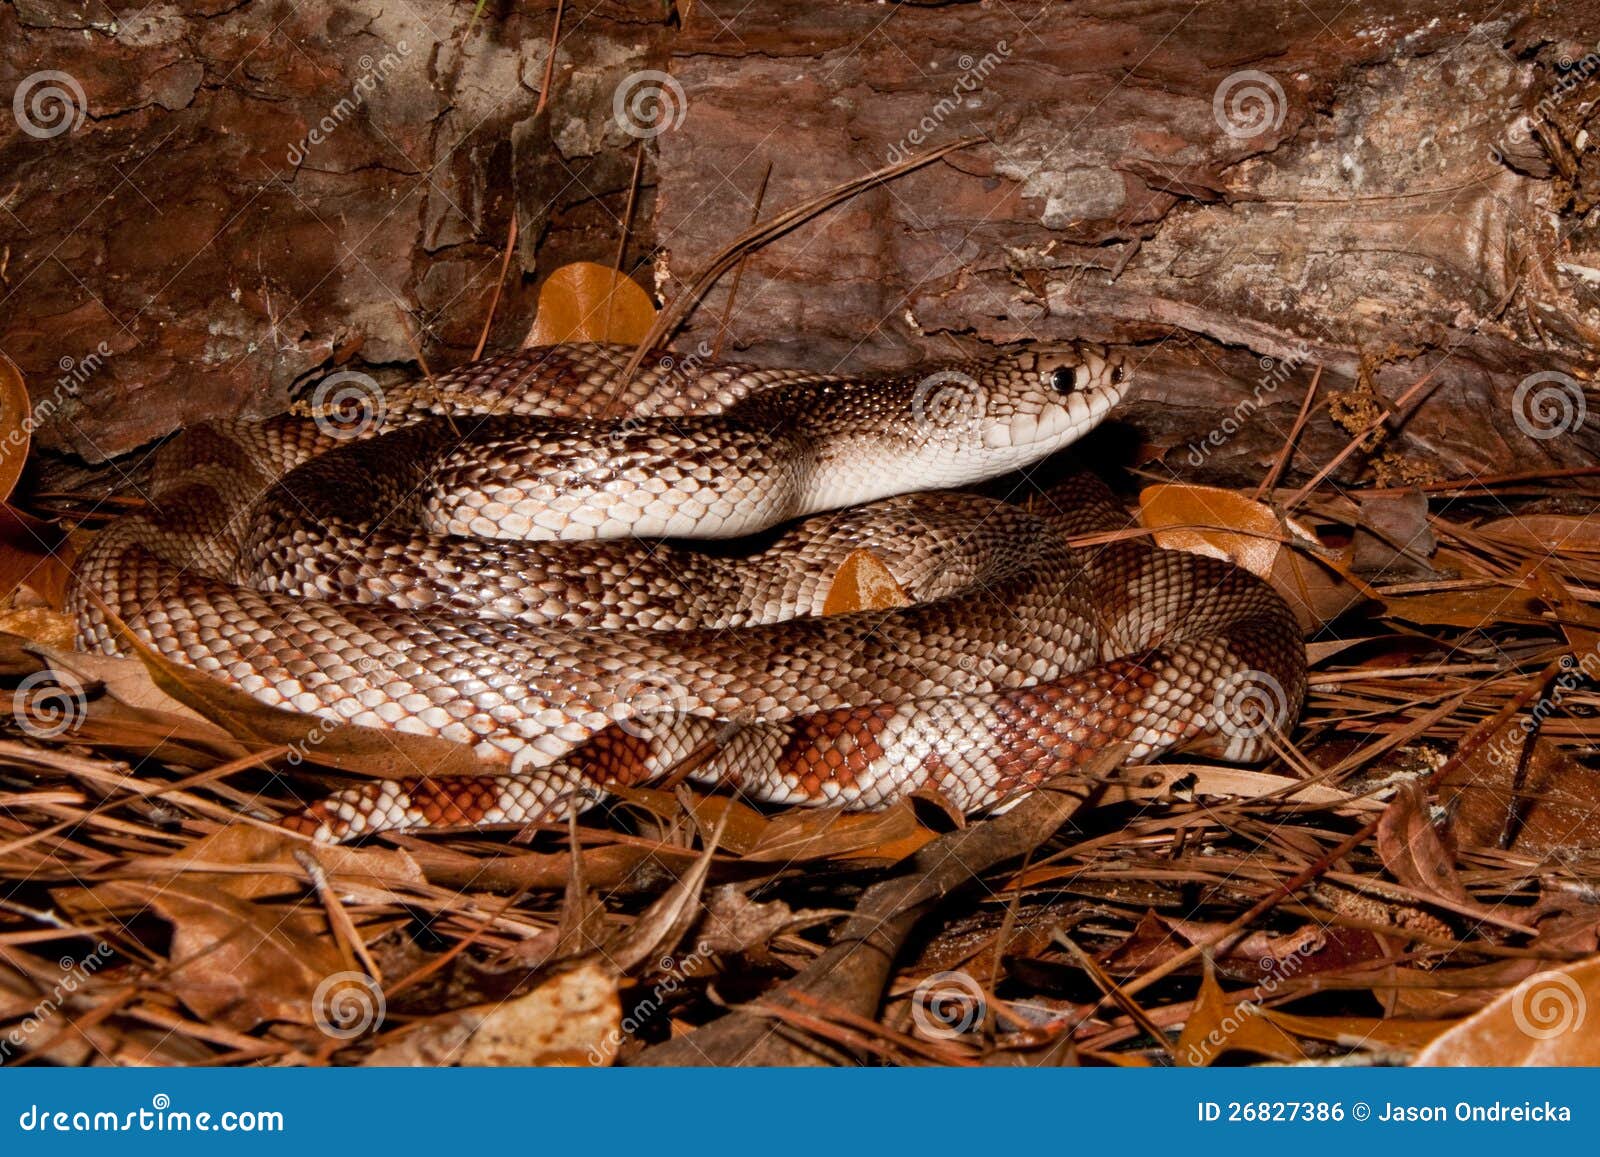 florida pine snake